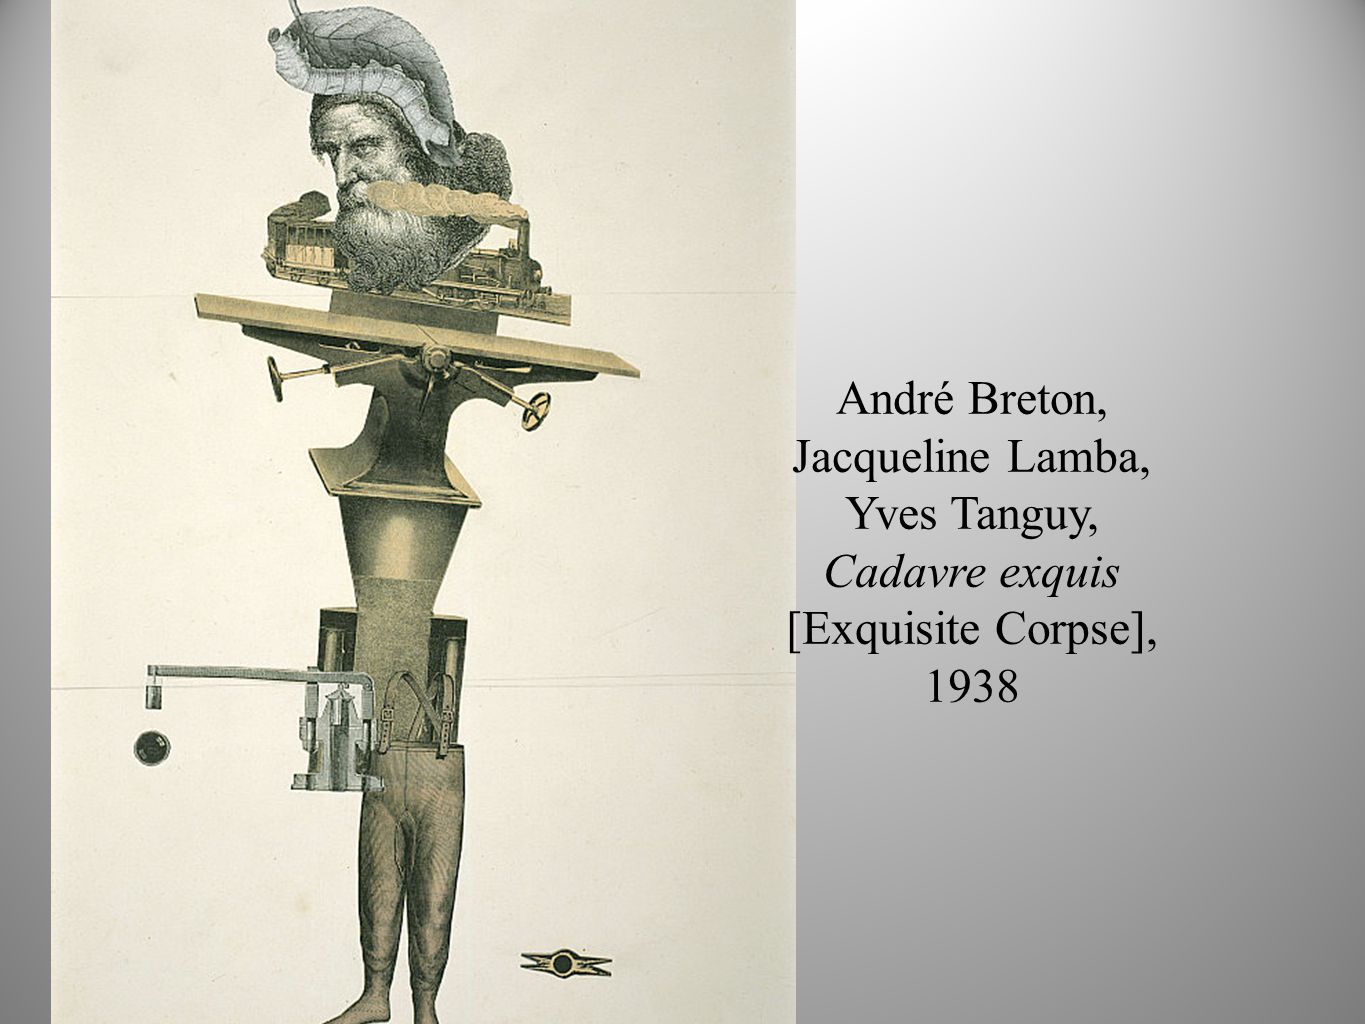 André Breton, Jacqueline Lamba, Yves Tanguy, Cadavre exquis [Exquisite Corpse], 1938